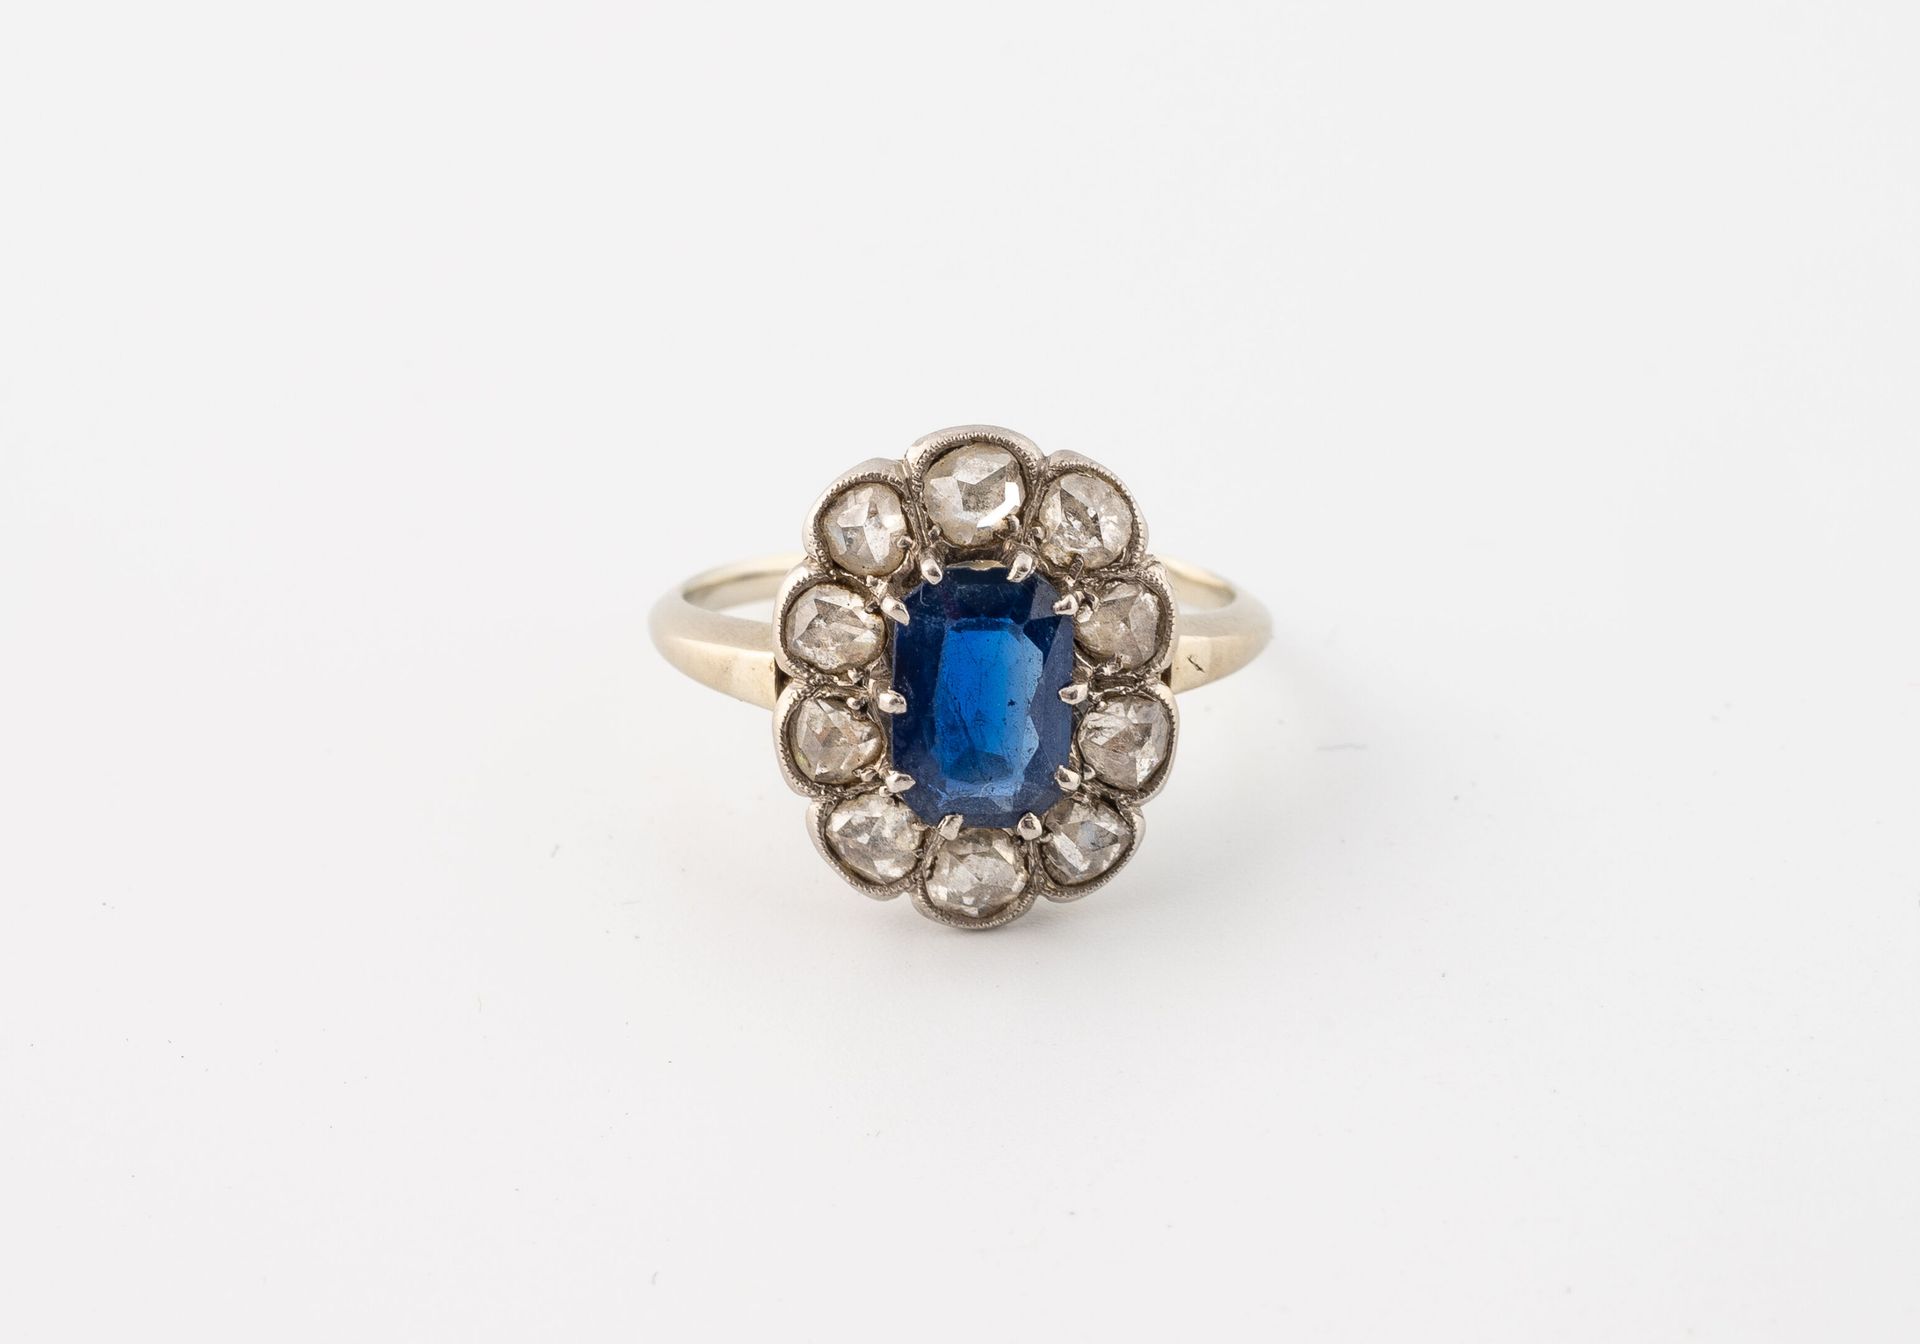 Null 白金（750）和铂金（850）戒指，以玫瑰色的合成蓝宝石为中心。 
毛重：3.5克 - 手指尺寸：56。
划痕和擦伤。